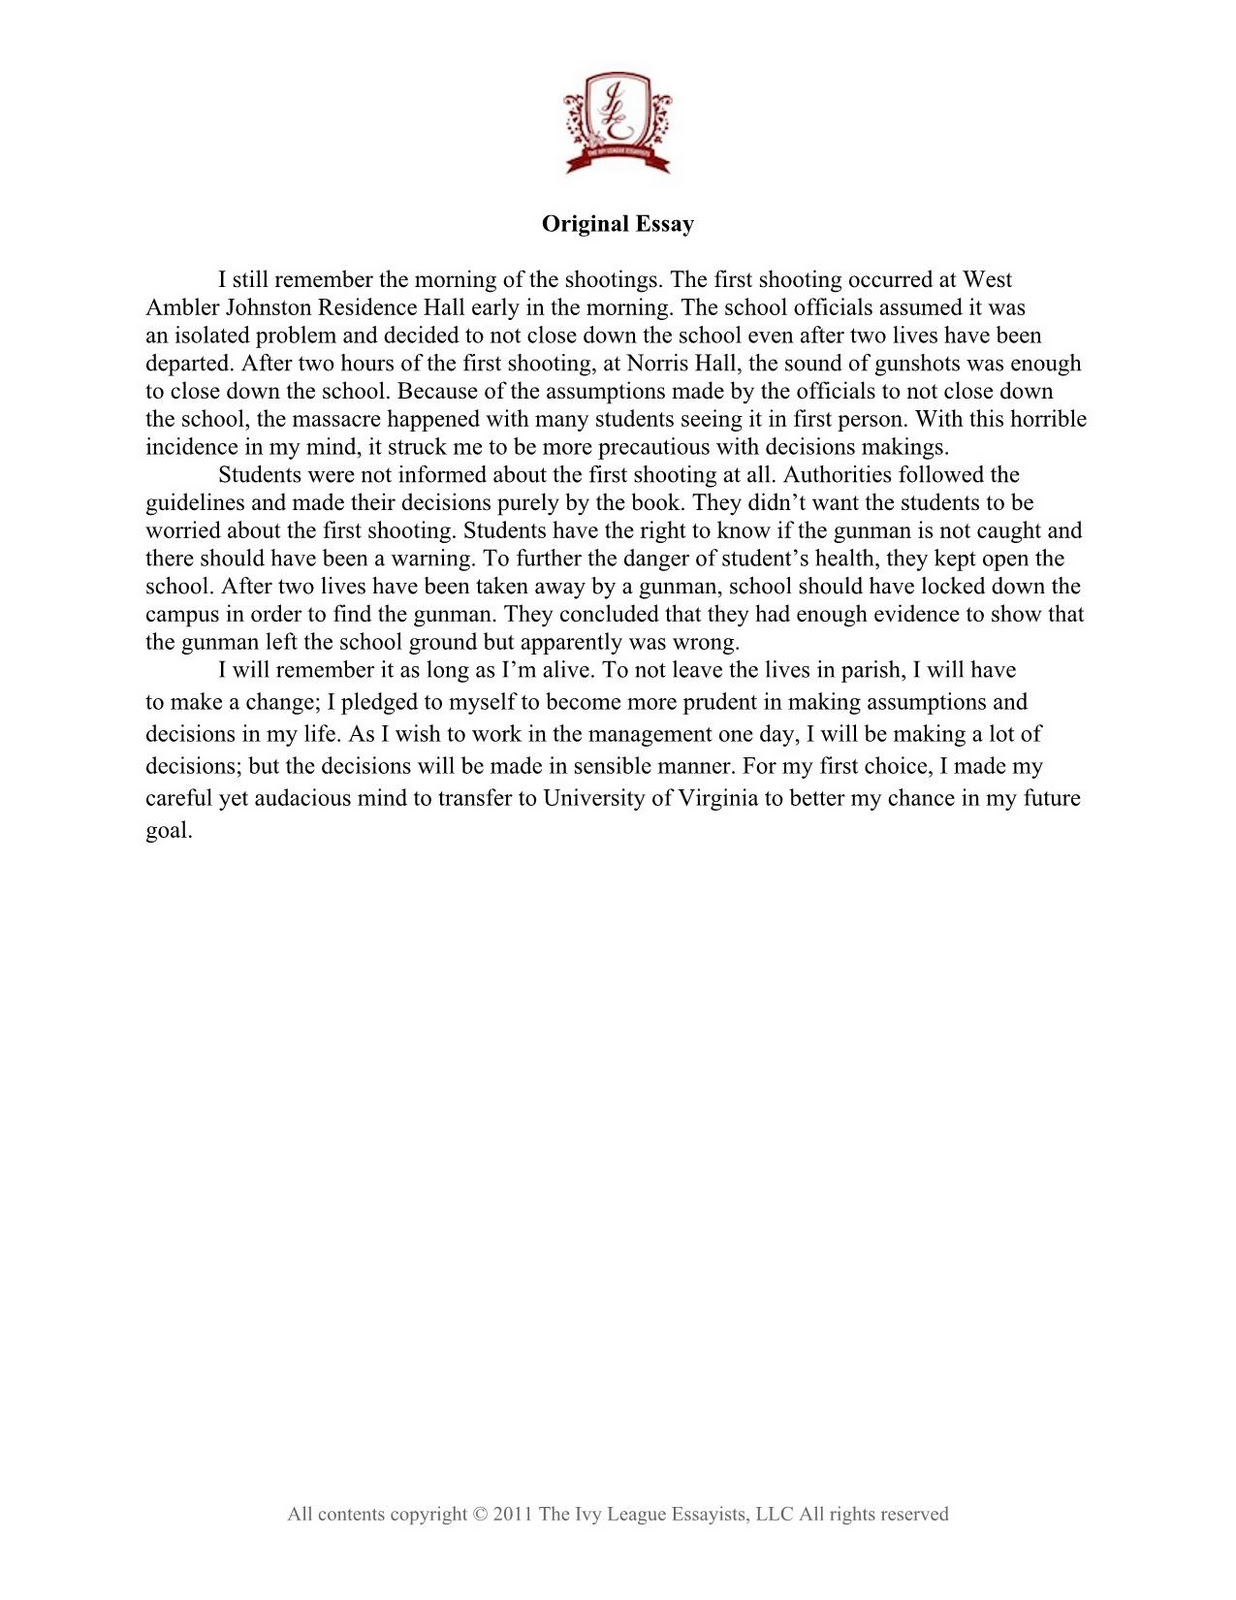 Virginia tech application essay 2014